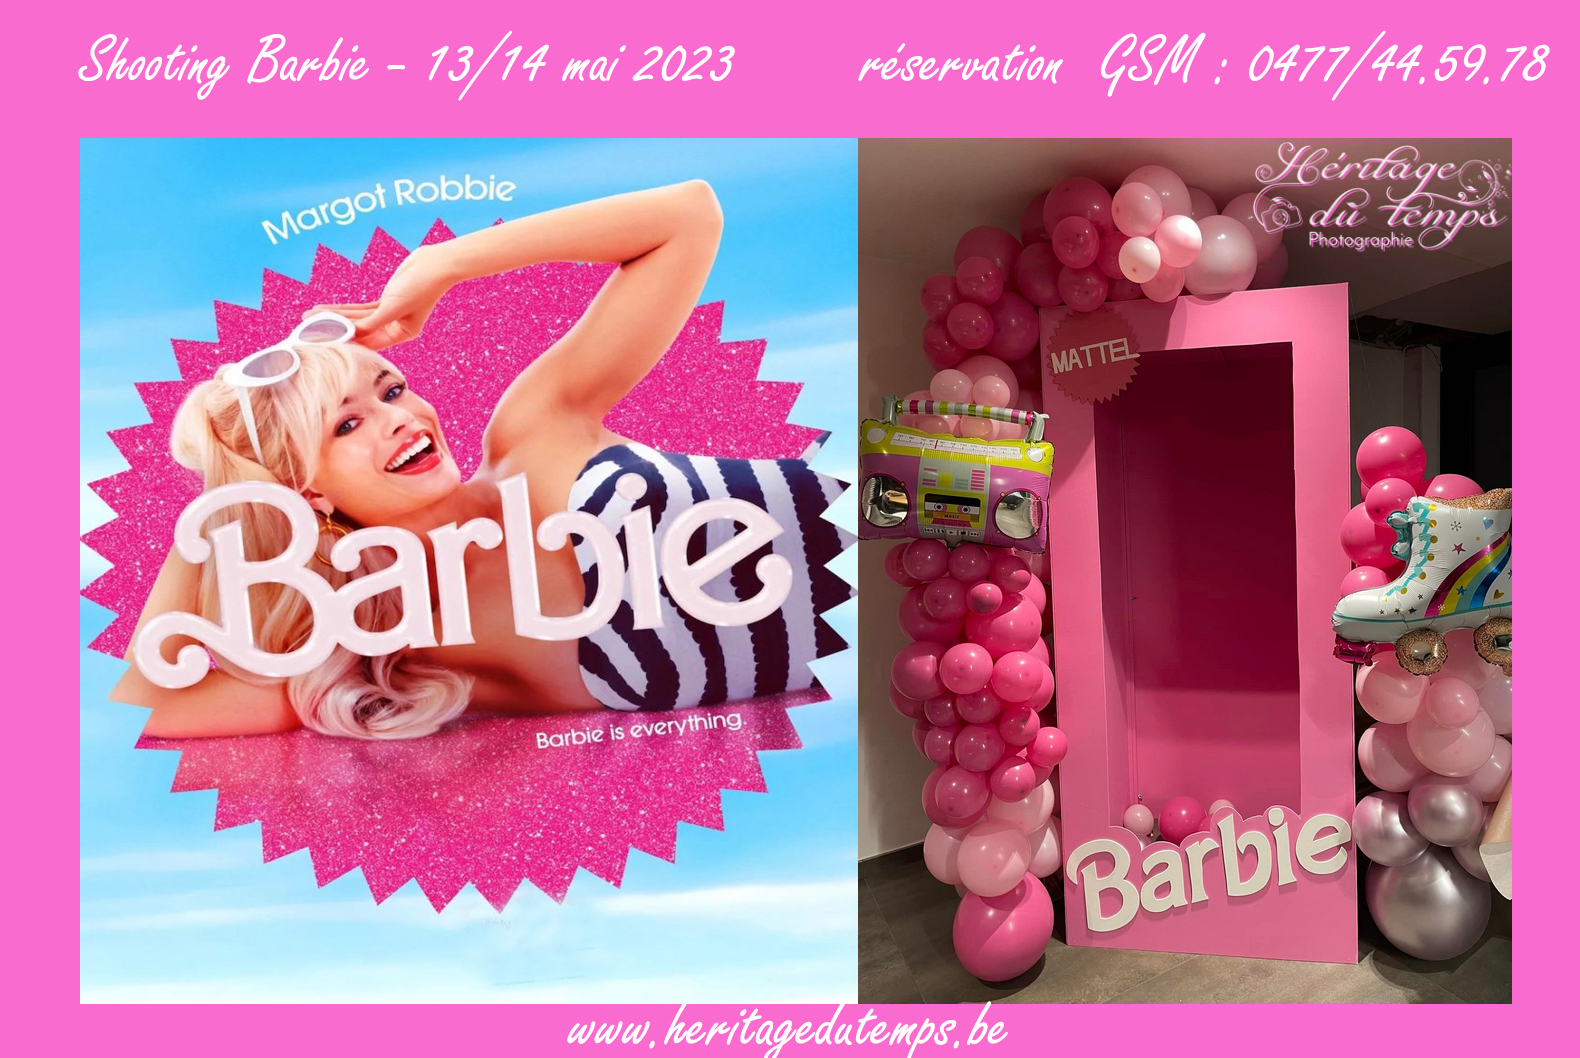 I'm a Barbie Girl - fête des mères